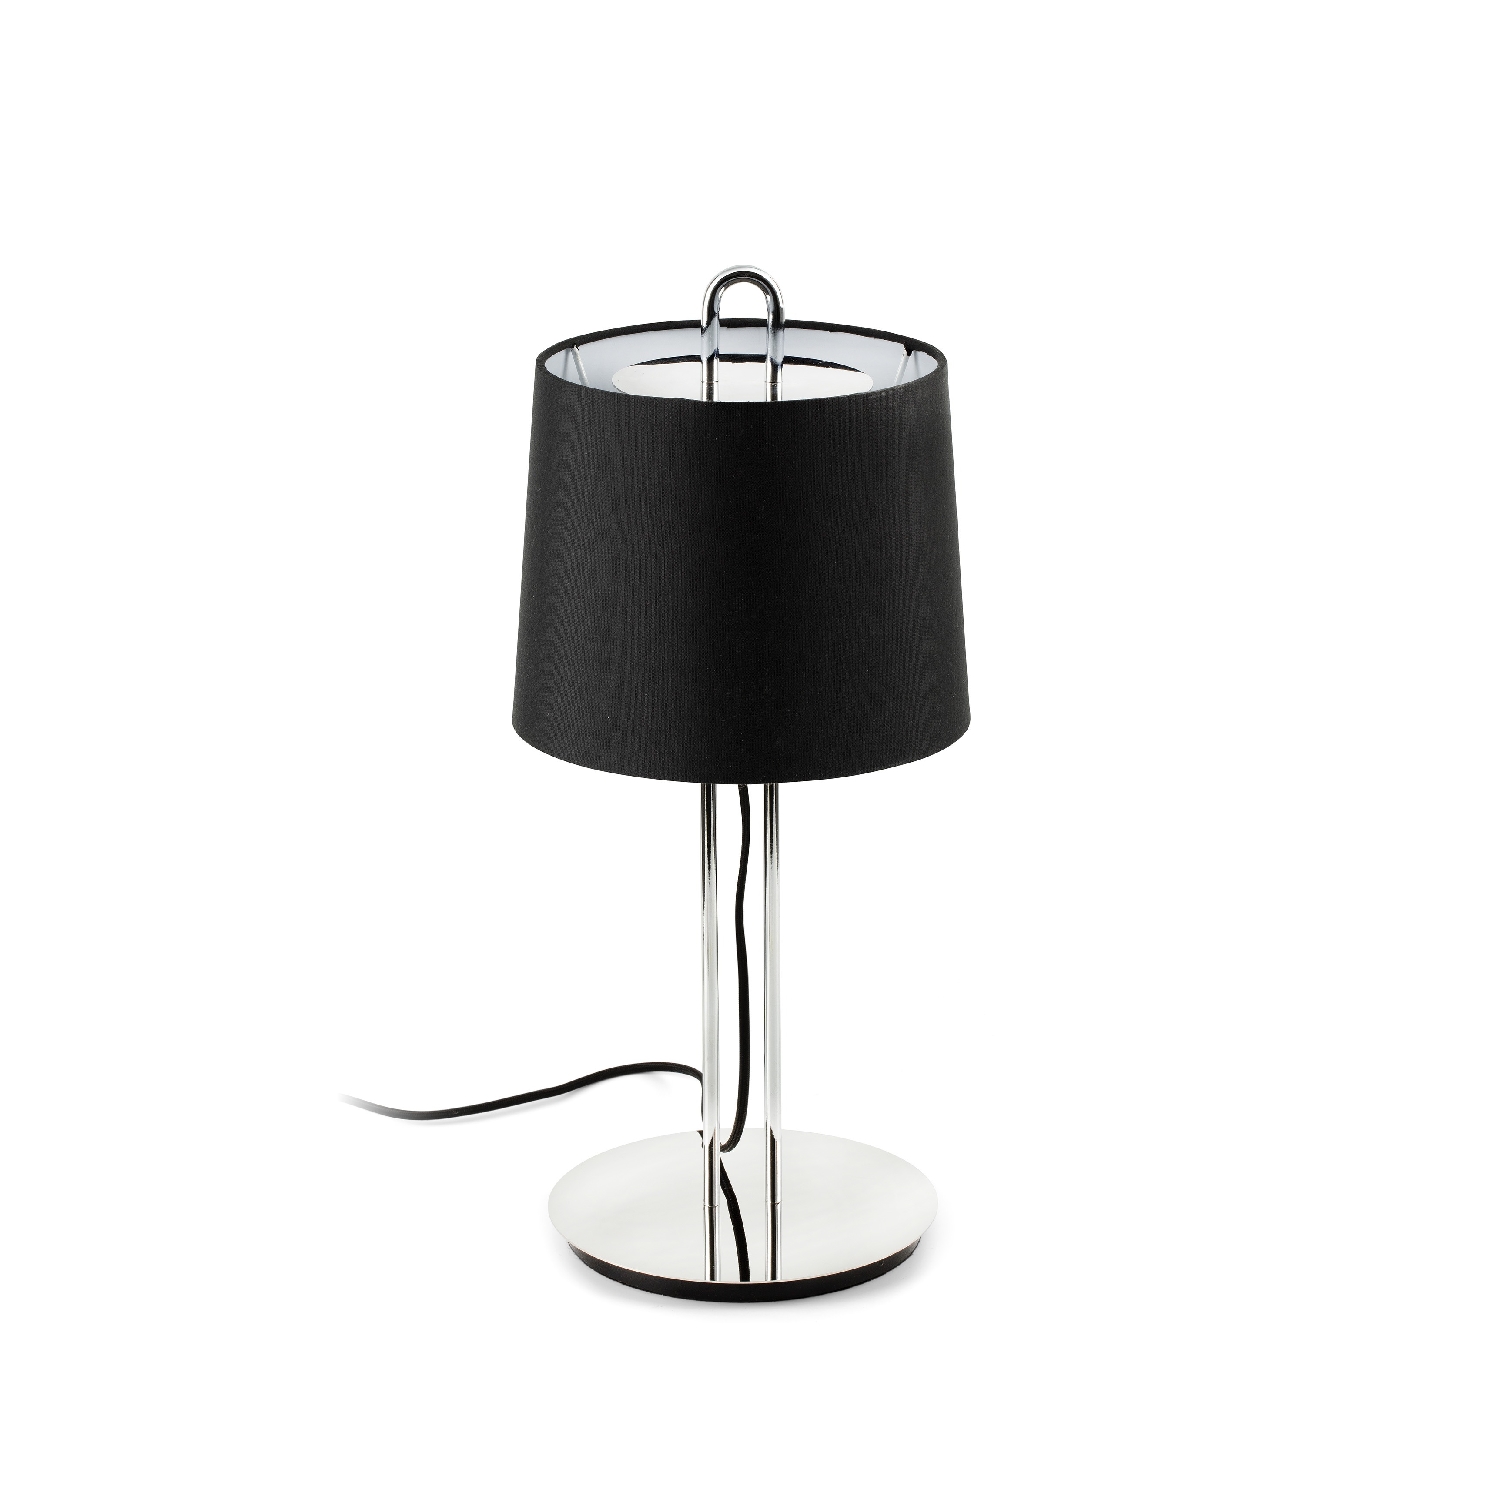 Lampa de masa / Veioza moderna design elegant MONTREAL crom/negru 24035-06